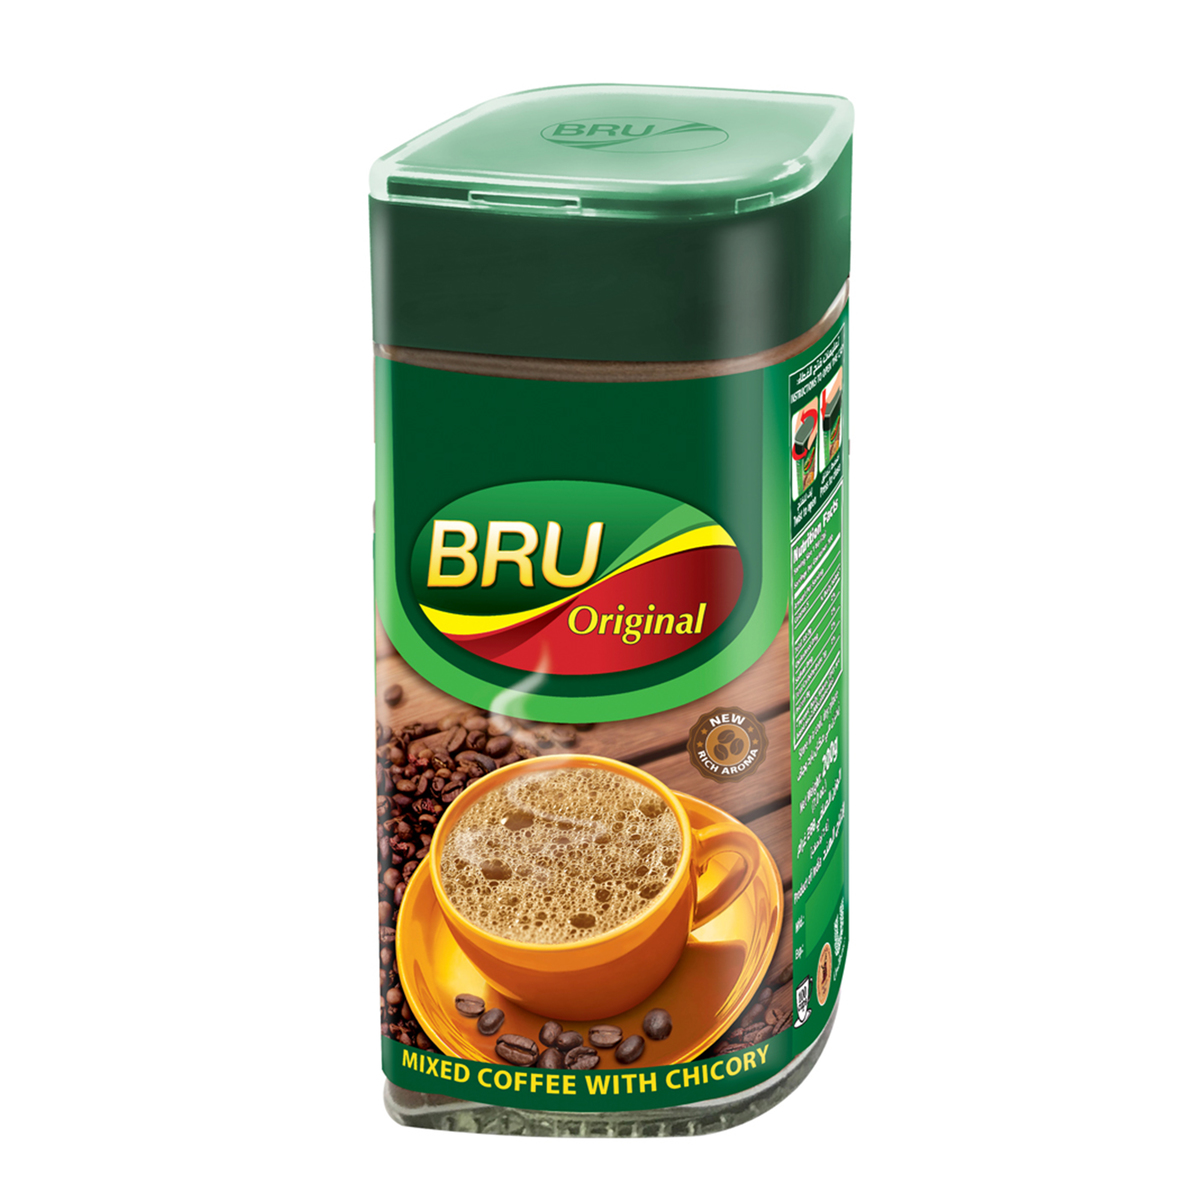 Bru coffee